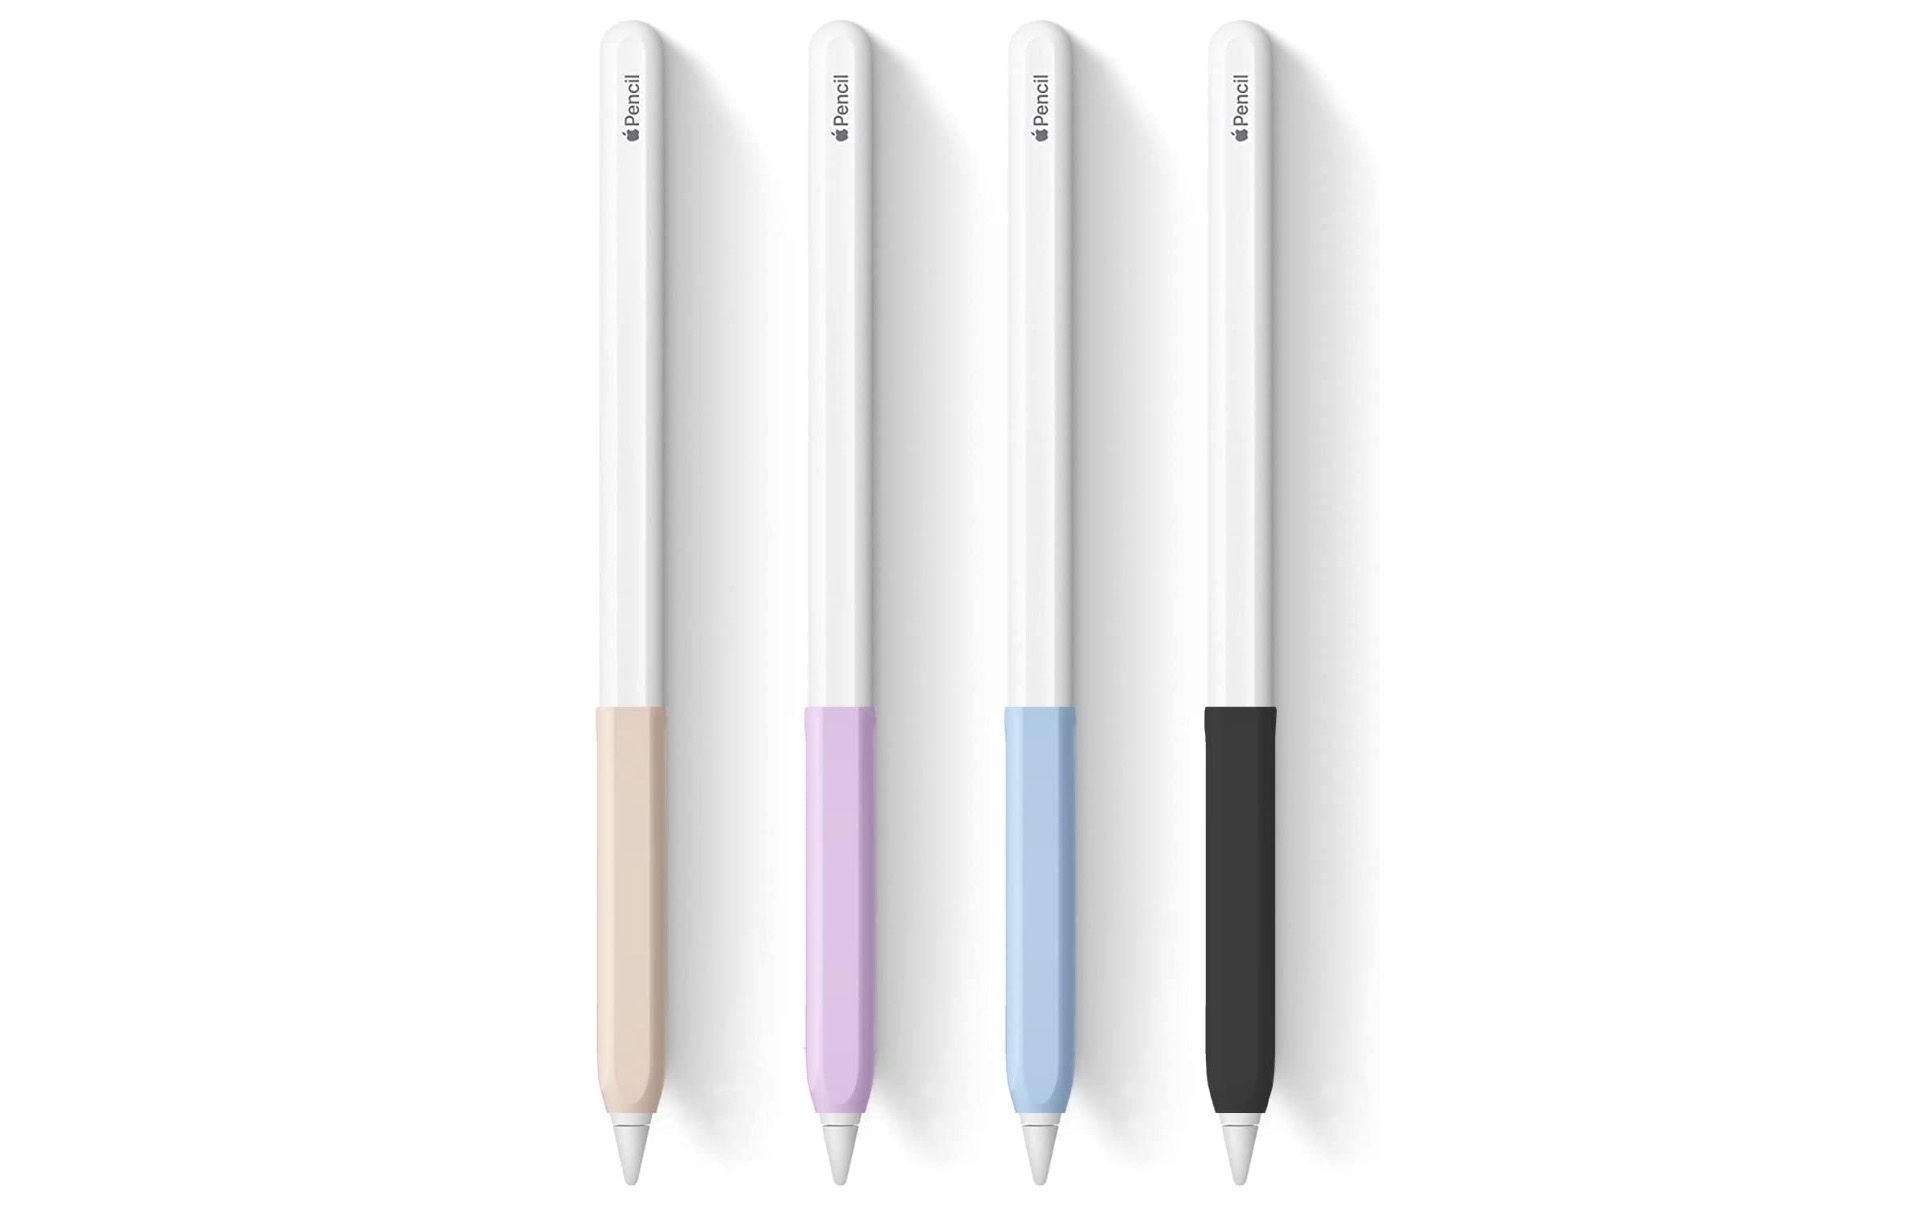 Ergonomic grip for Apple Pencil 2nd generation